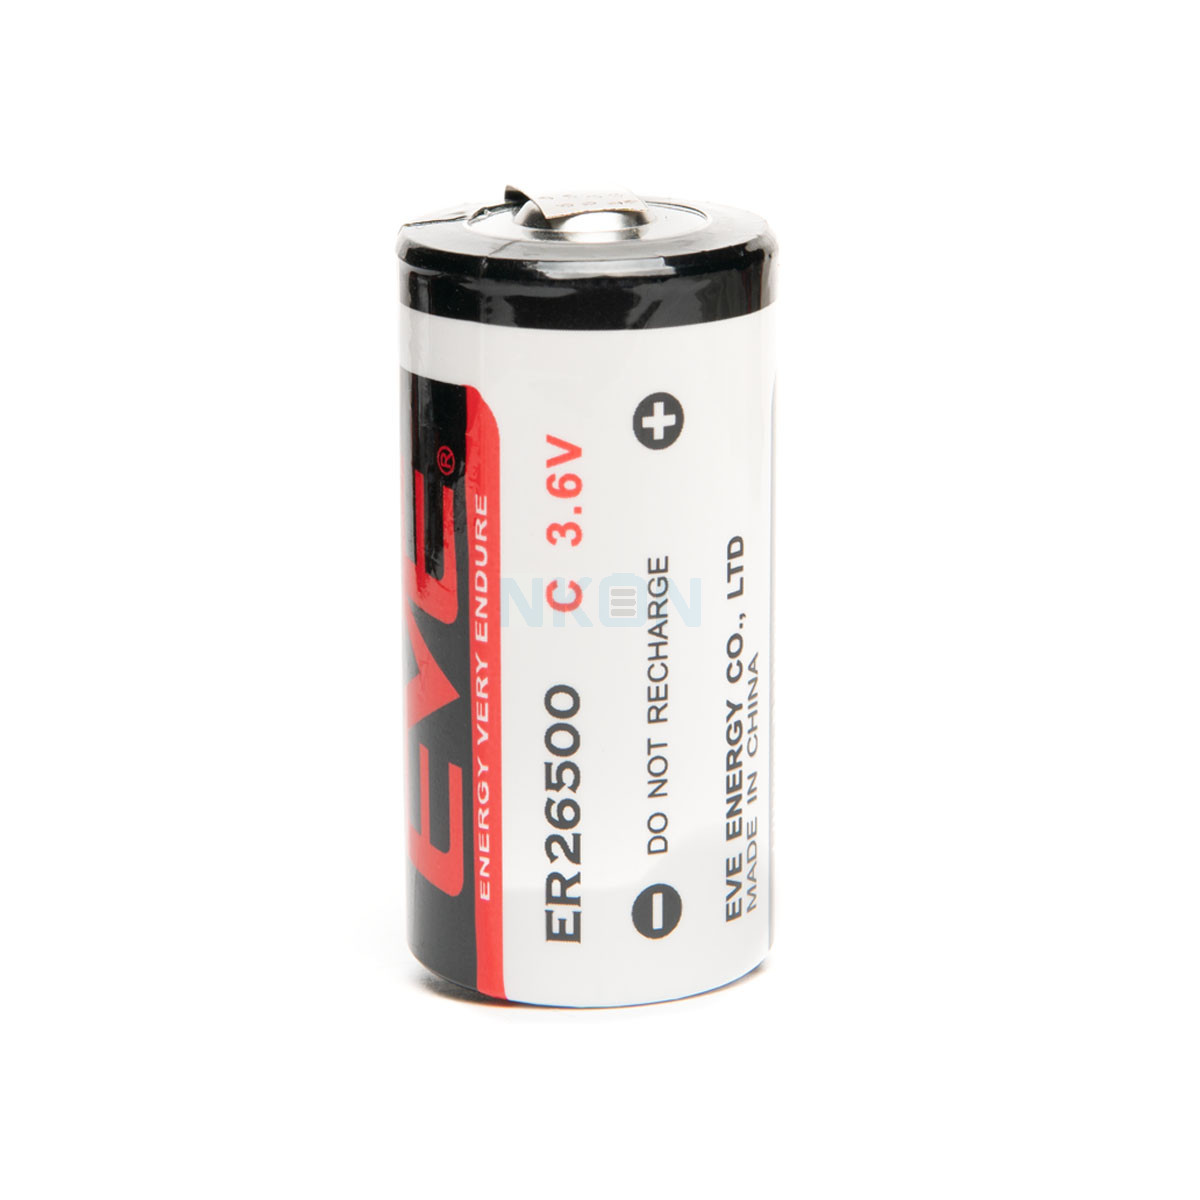 Acheter batterie lisun ER26500, Nouvelle Batterie lisun ER26500 - Détails  du produit